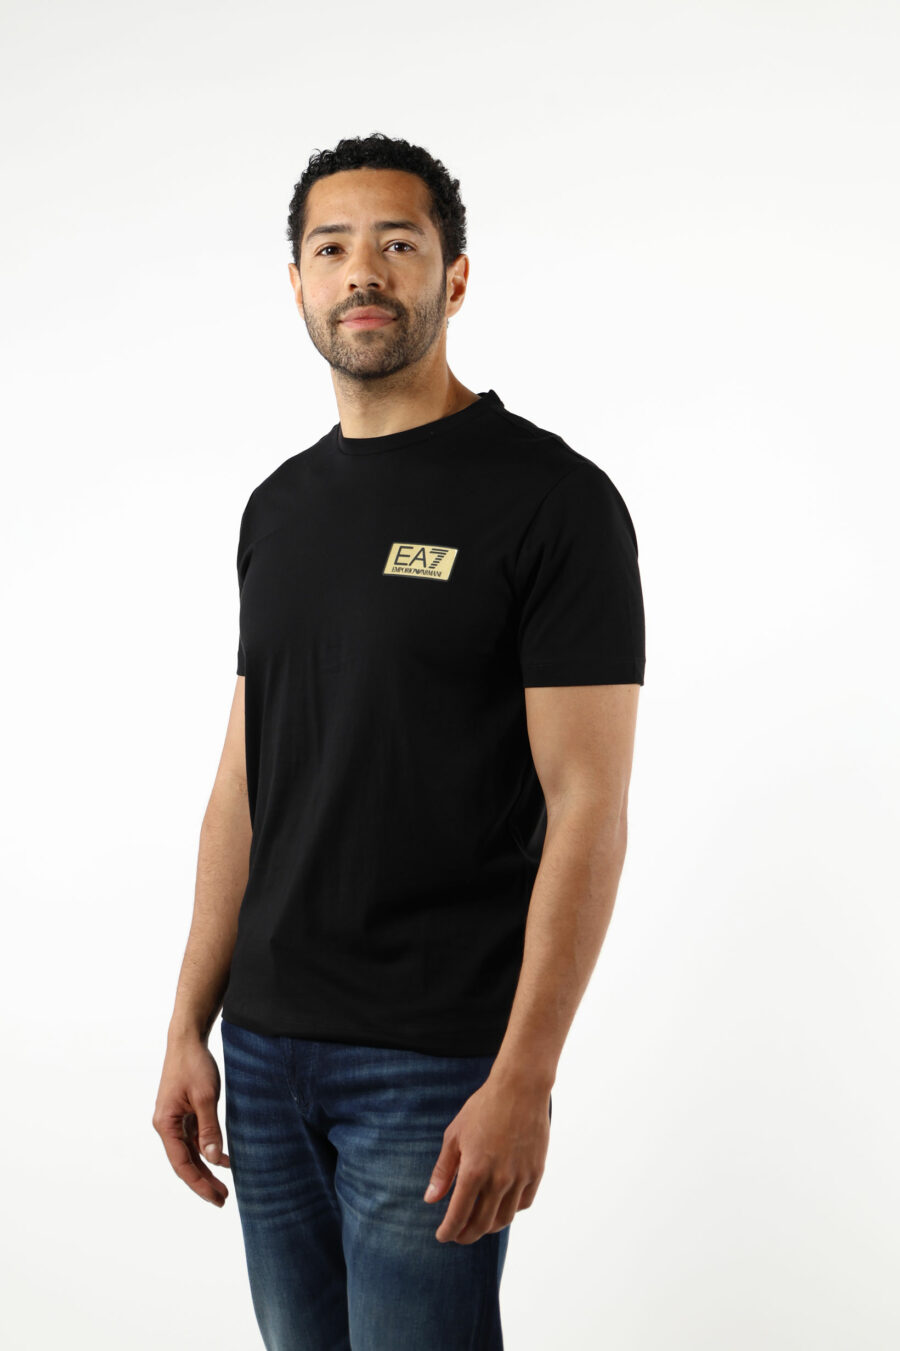 Camiseta negra con minilogo "lux identity" negro en placa dorada - 110813